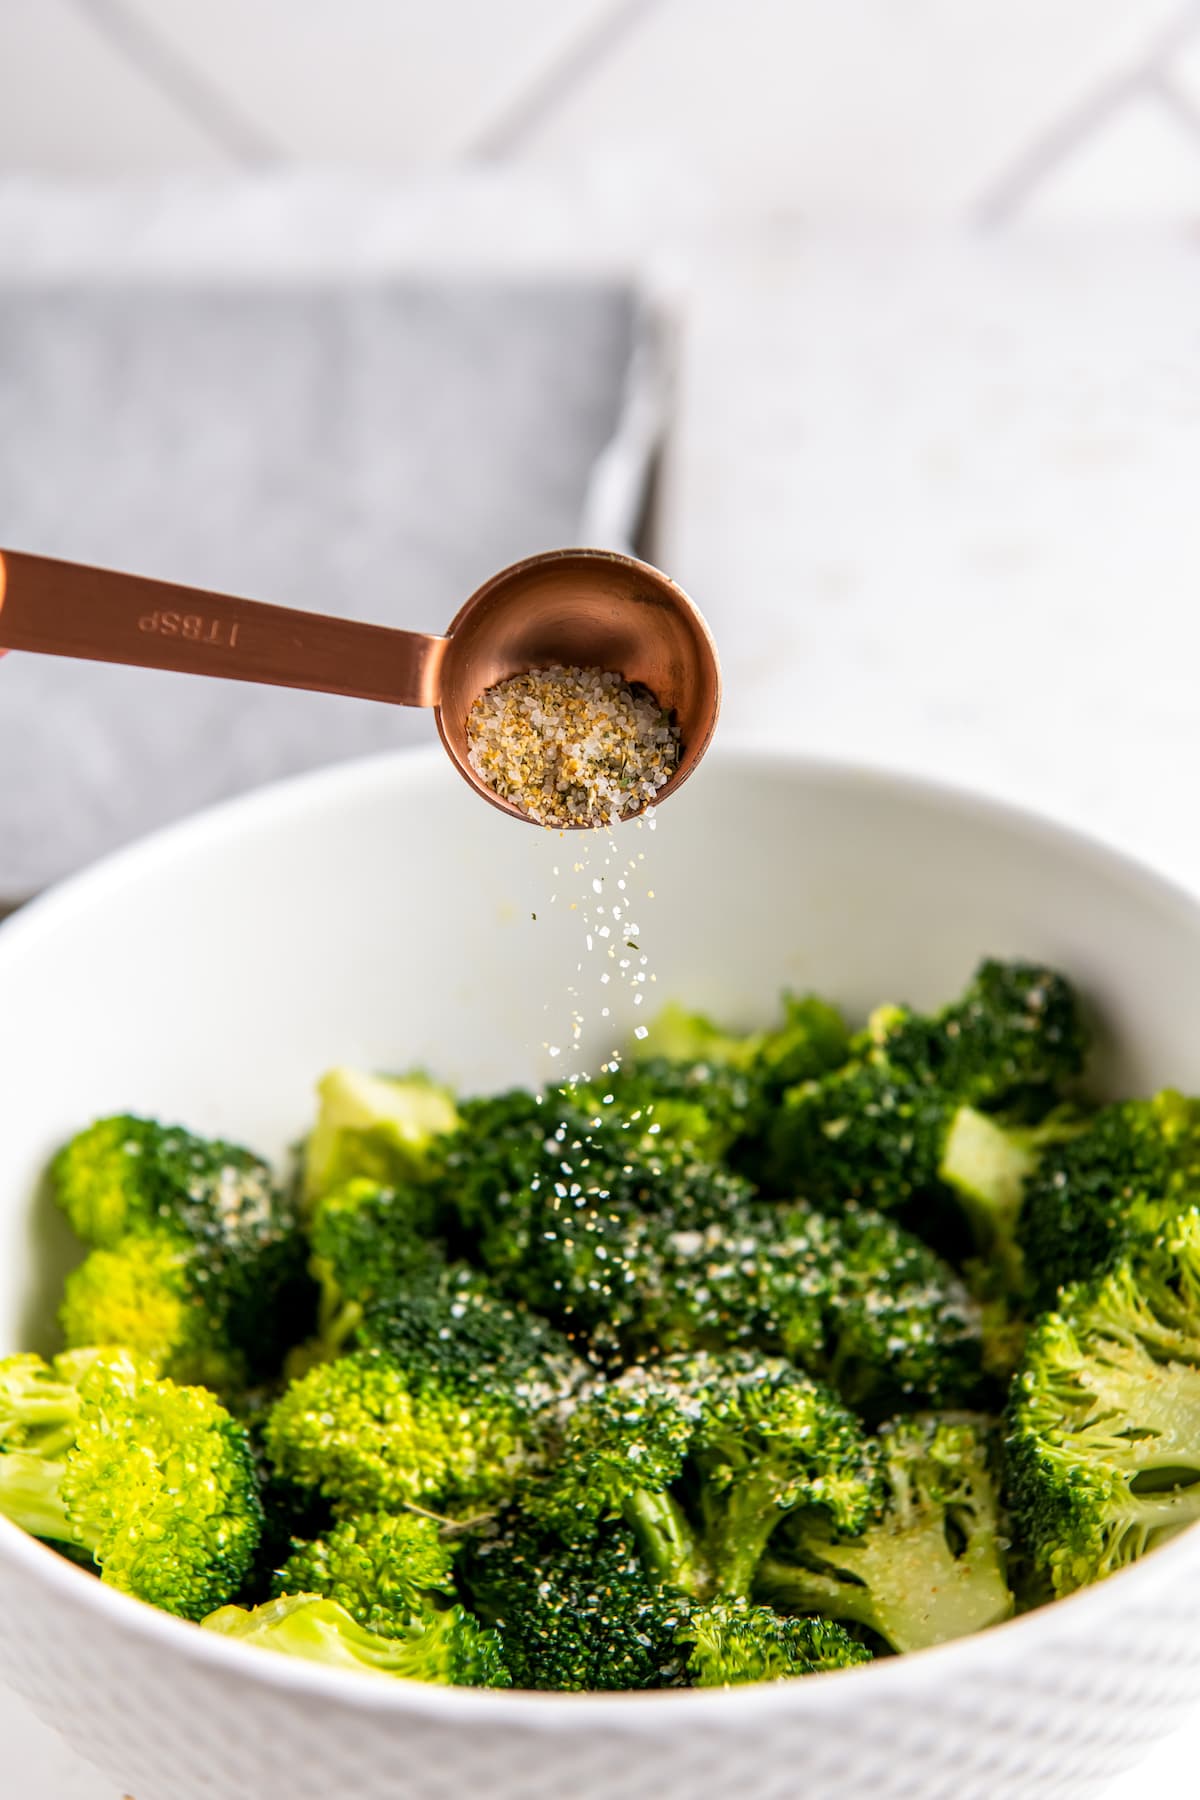 seasoning a bowl of broccoli